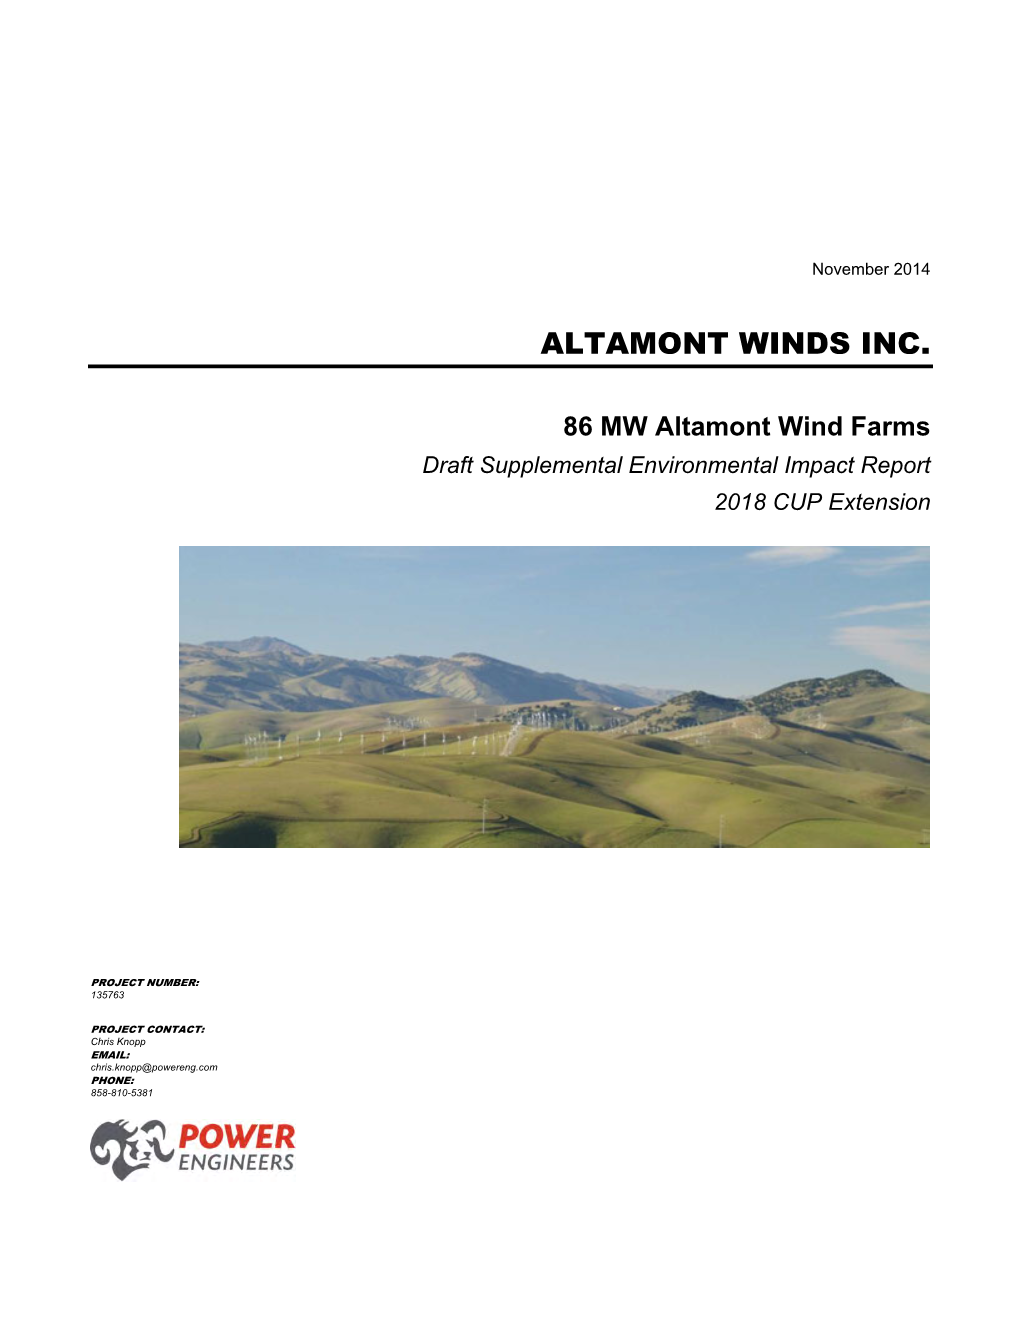 Altamont Winds Inc